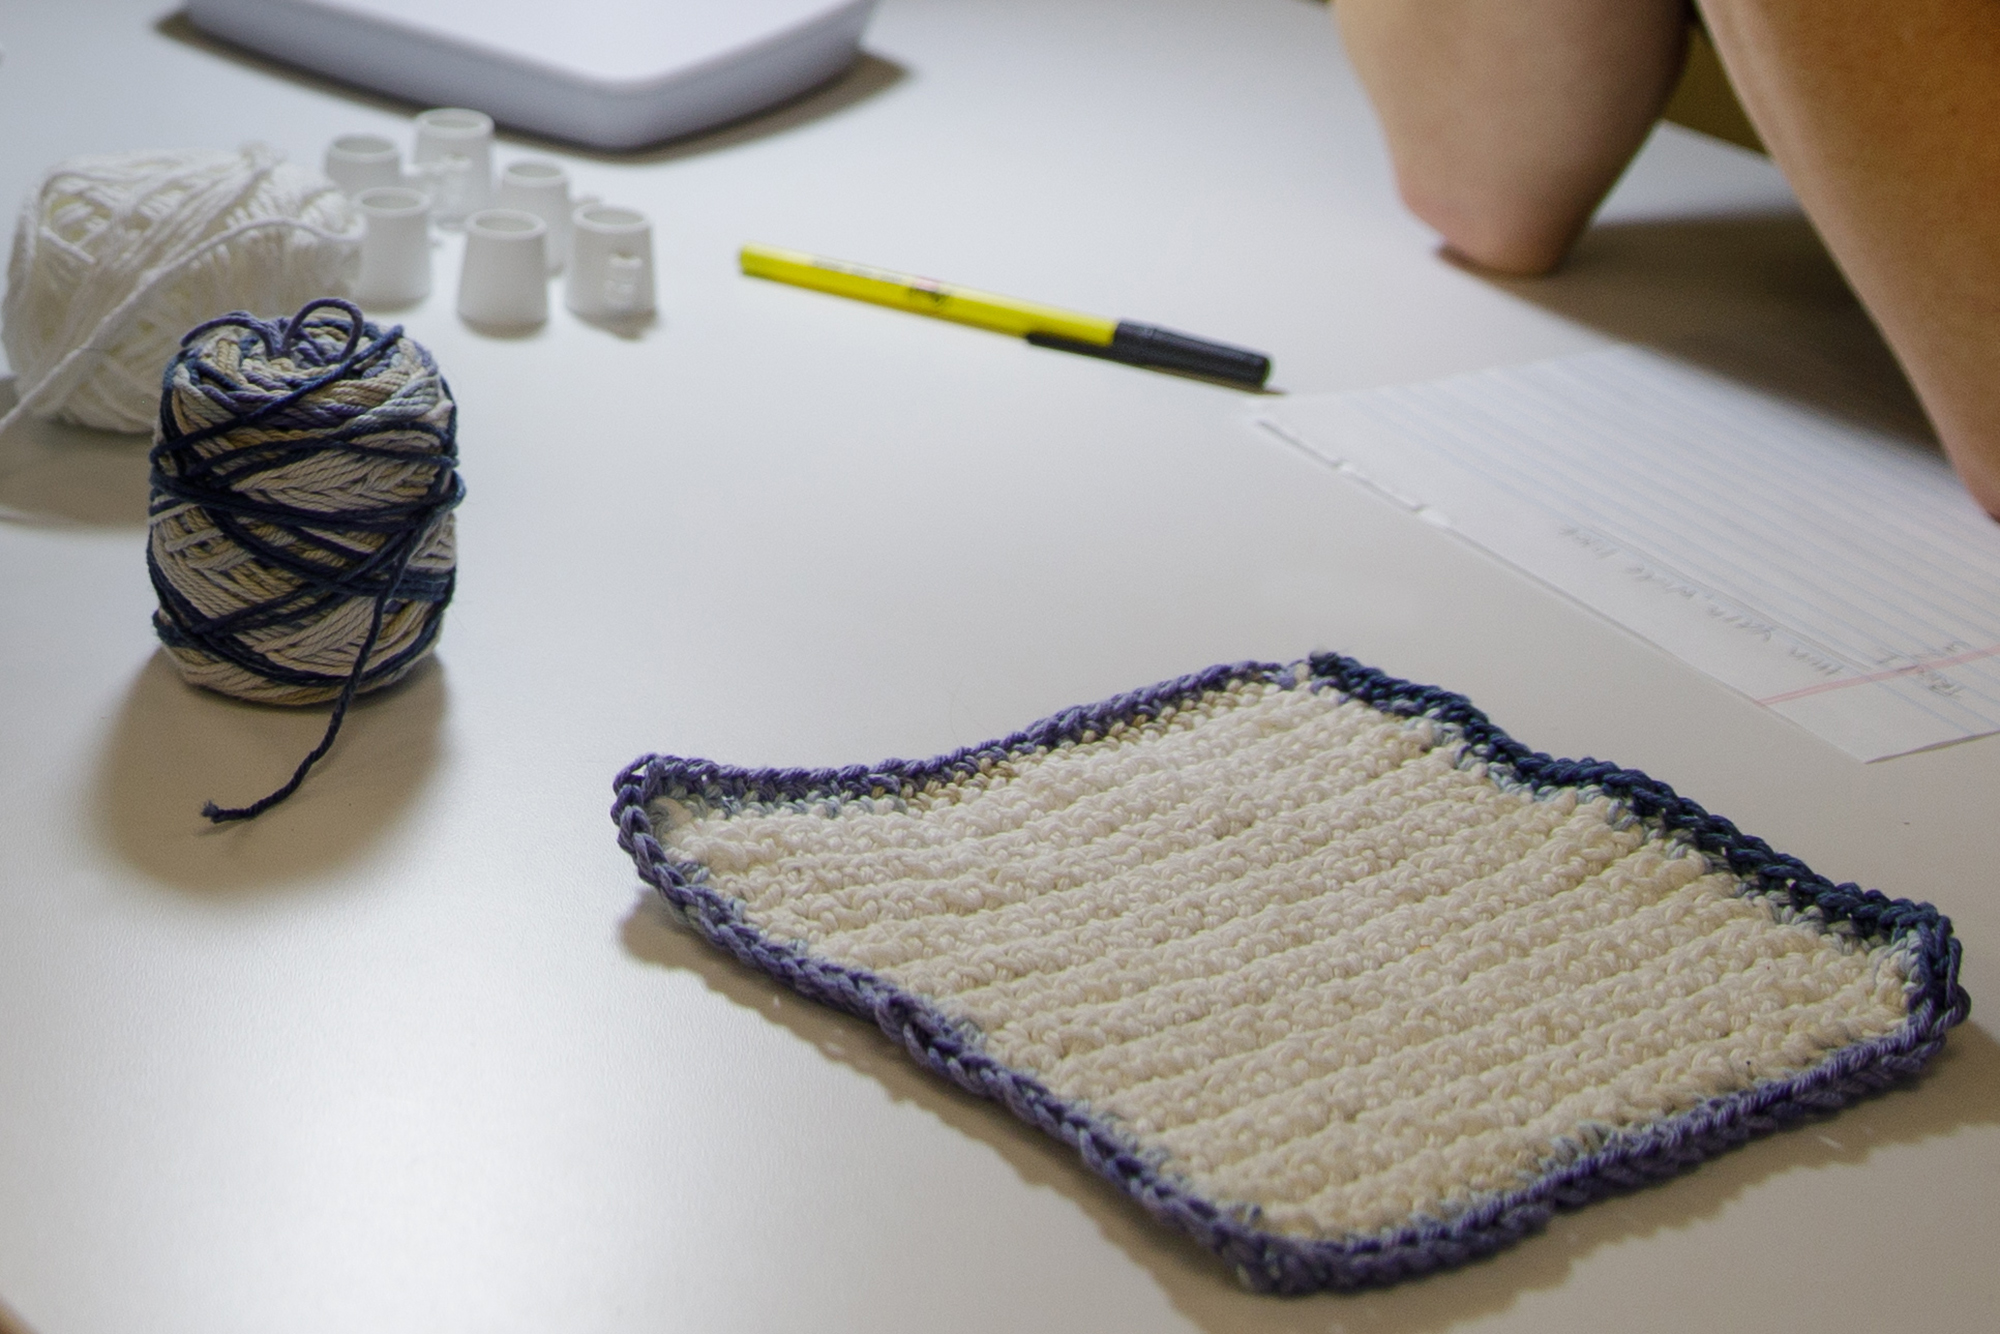 a crochet potholder sits on a table